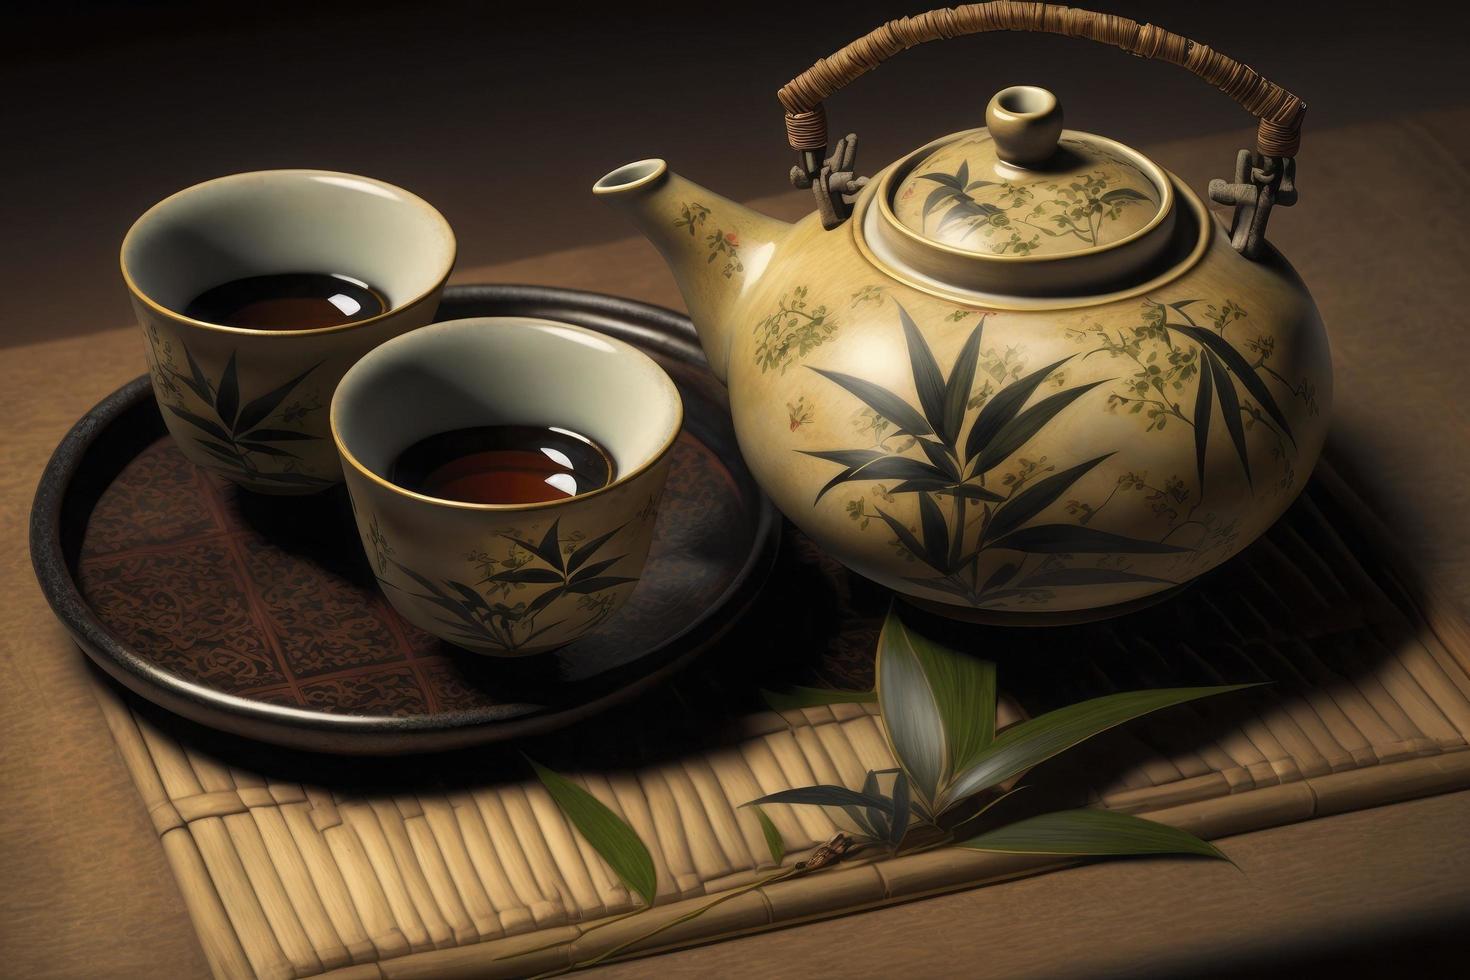 japonés té - caliente tetera y tazas de té en bambú estera foto